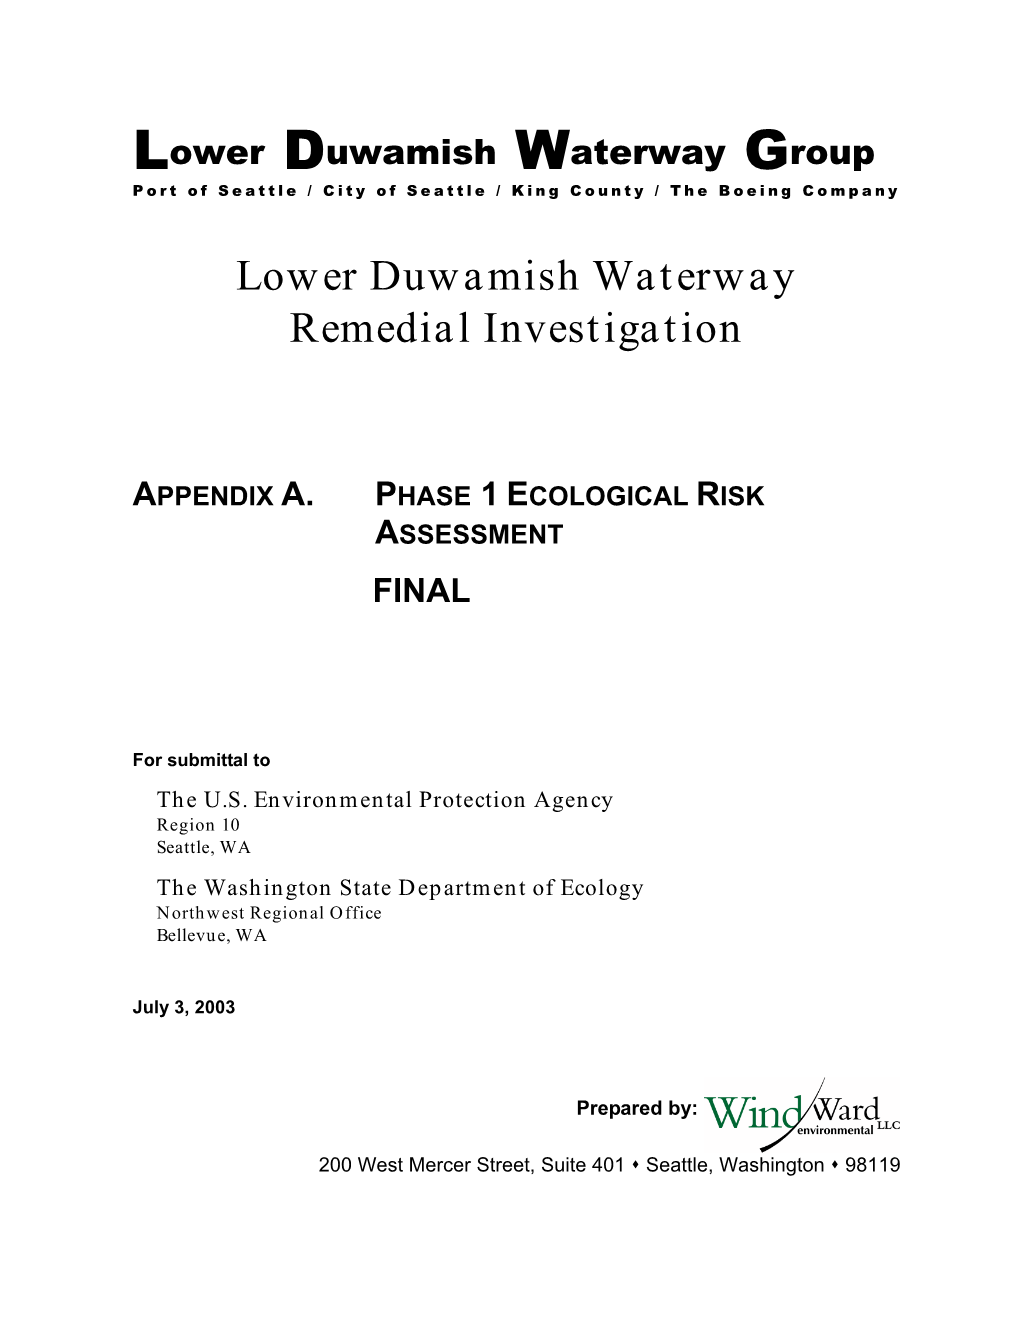 Appendix A: Ecological Risk Assessment